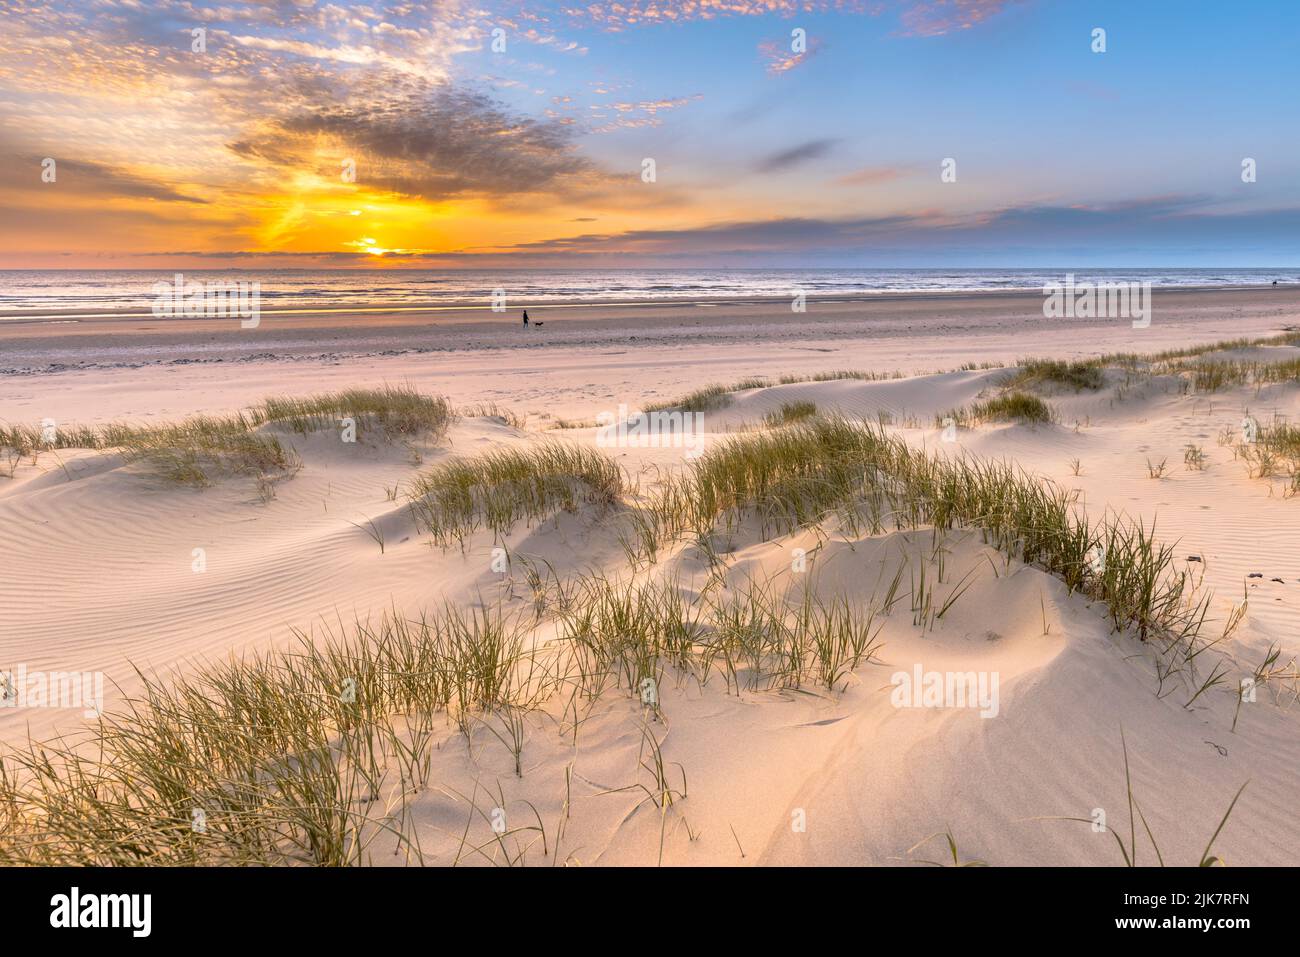 Beach and dunes Dutch coastline landscape seen from Wijk aan Zee over the North Sea at sunset, Netherlands Stock Photo